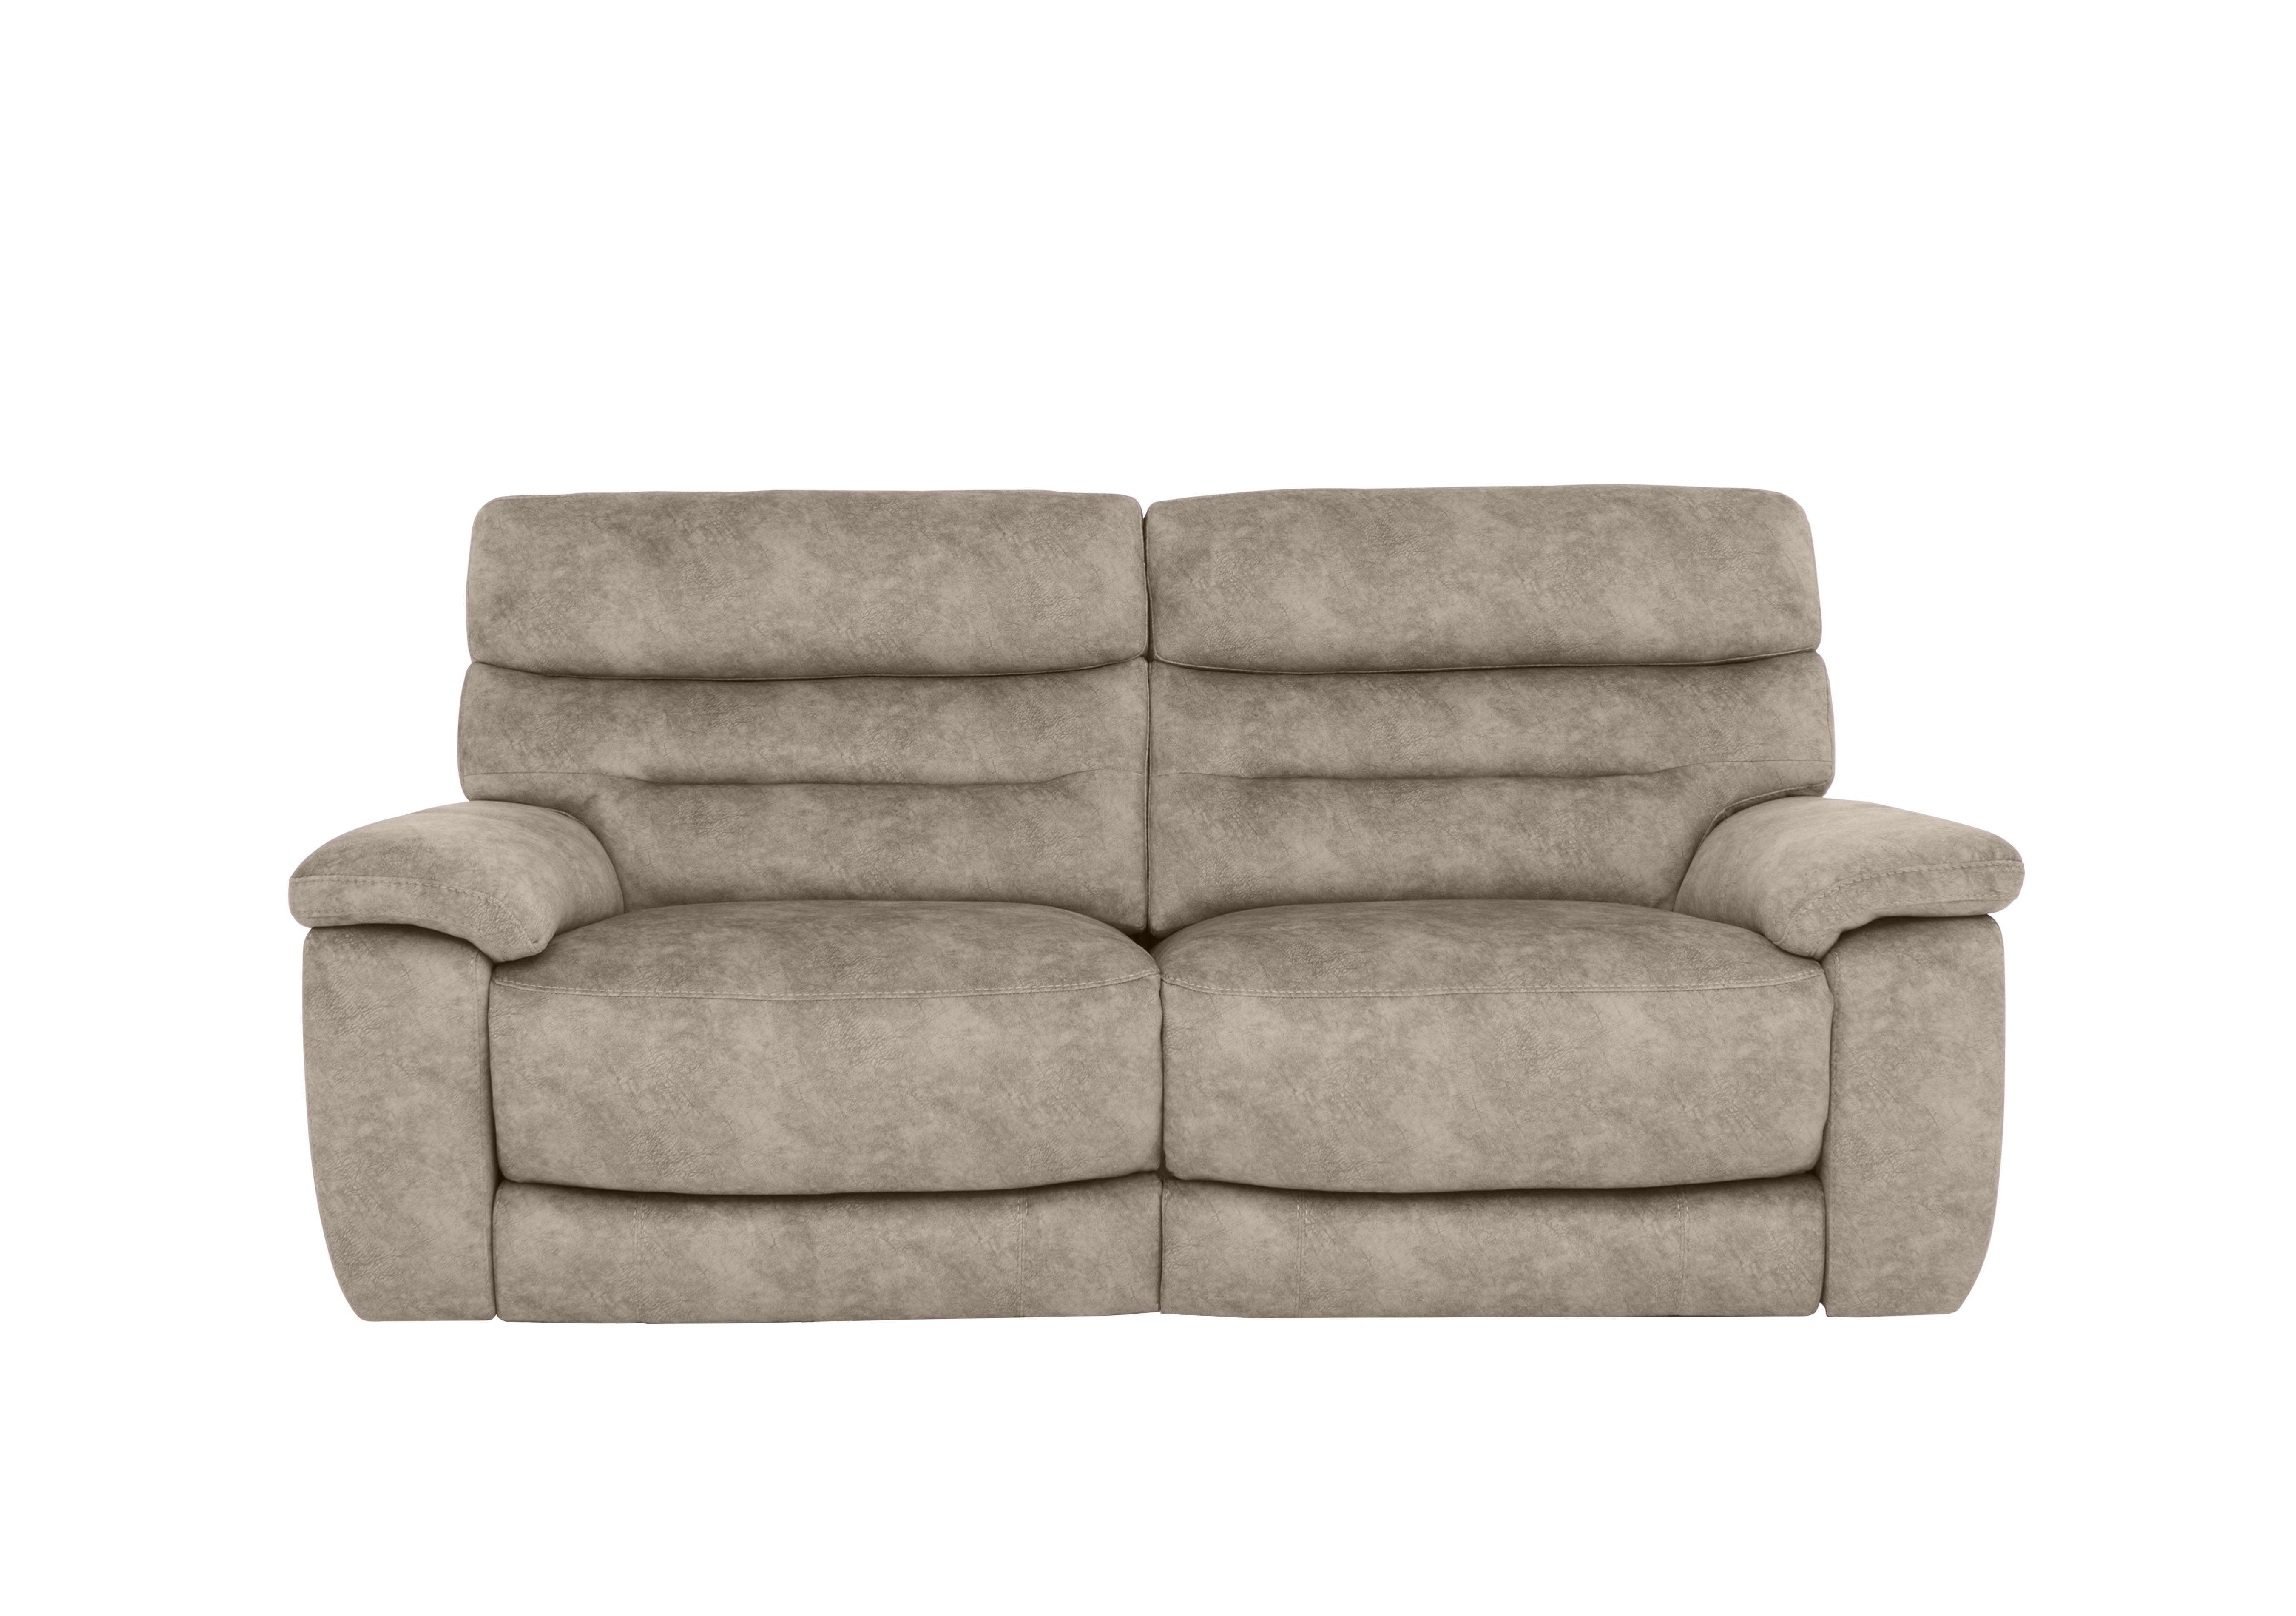 Nimbus 3 Seater Fabric Power Recliner Sofa with Power Headrests in Bfa-Bnn-R29 Mink on Furniture Village